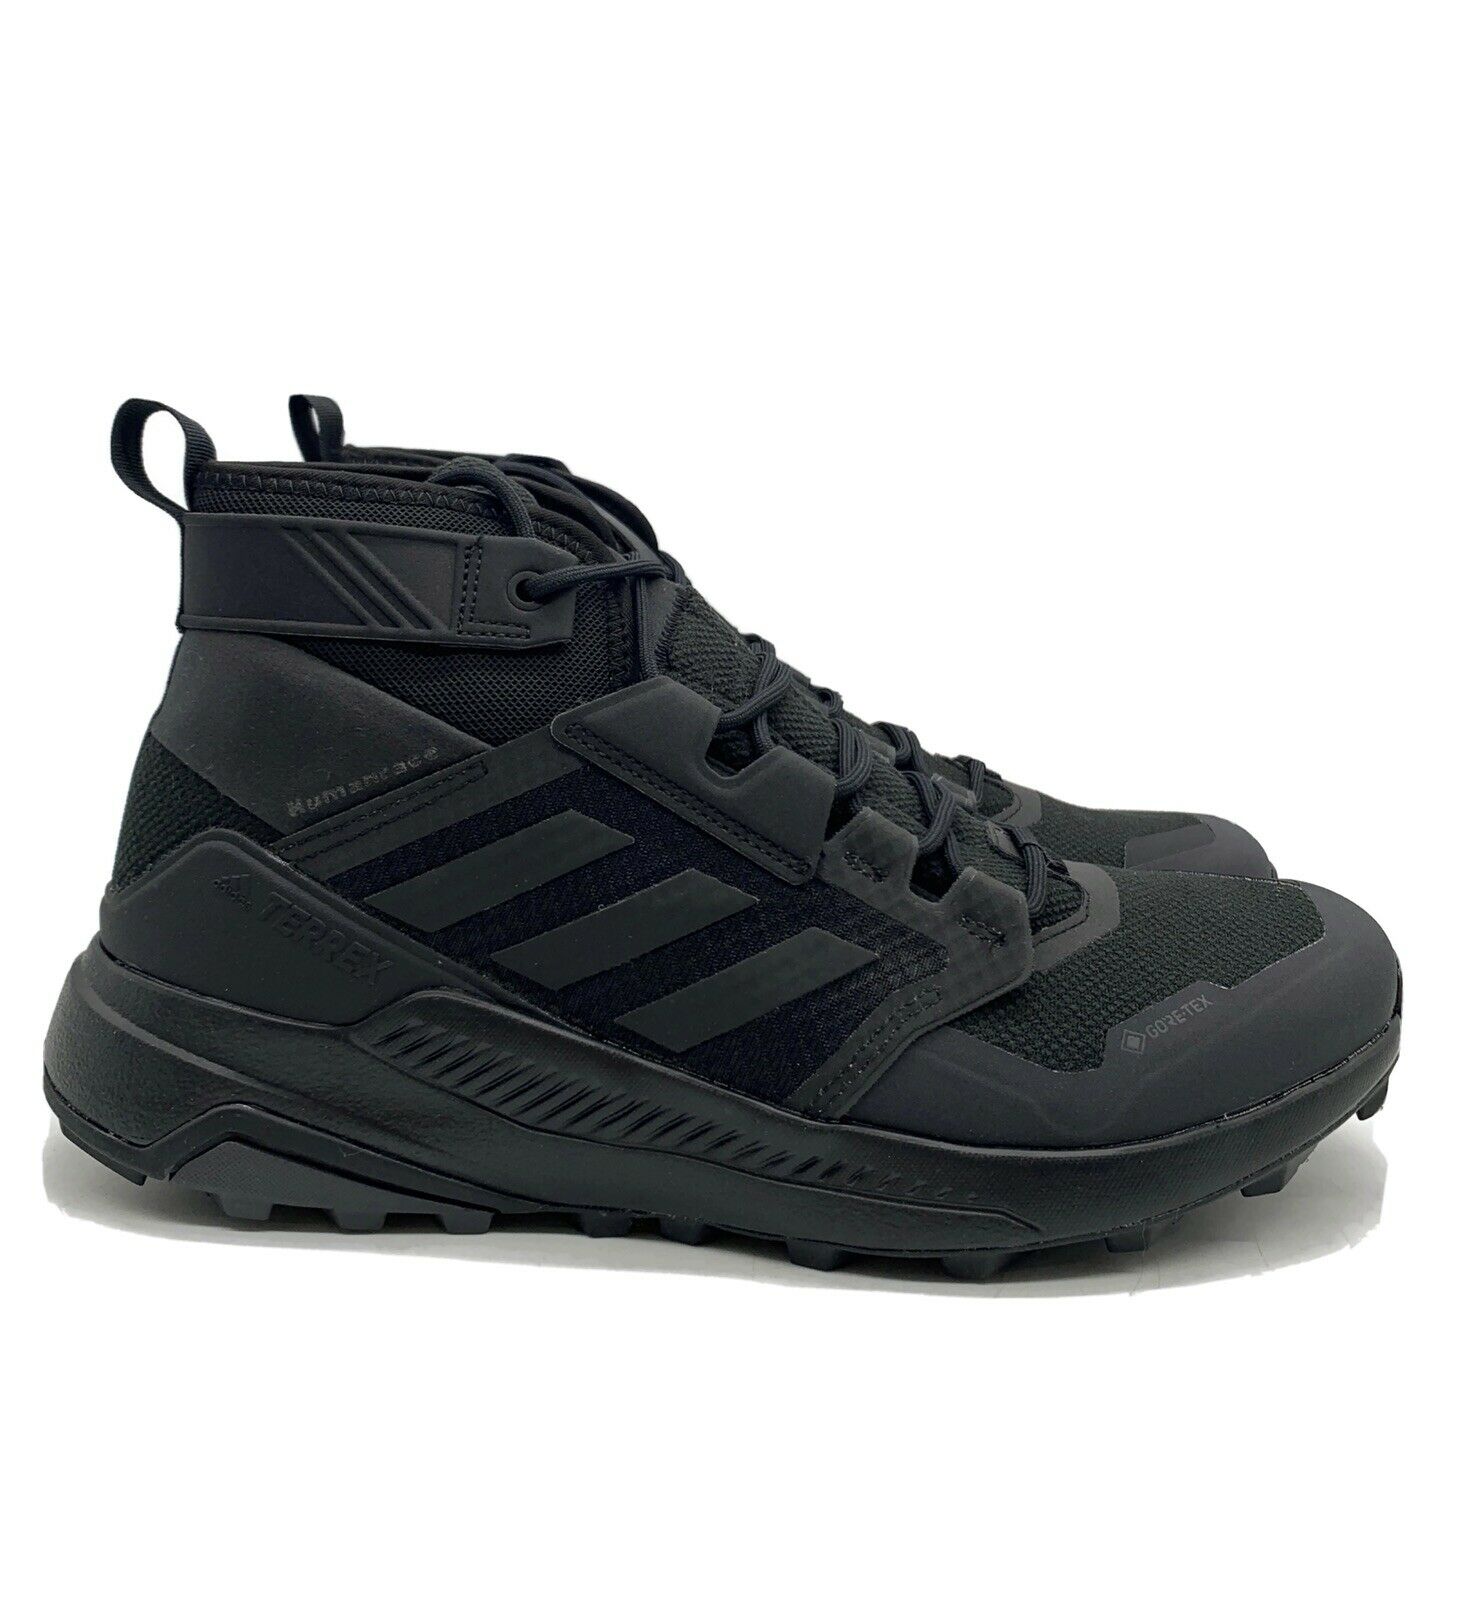 Adidas PW Terrex Trail Maker Mid (Mens Size 12) Goretex Hiking Boots Black Shoe